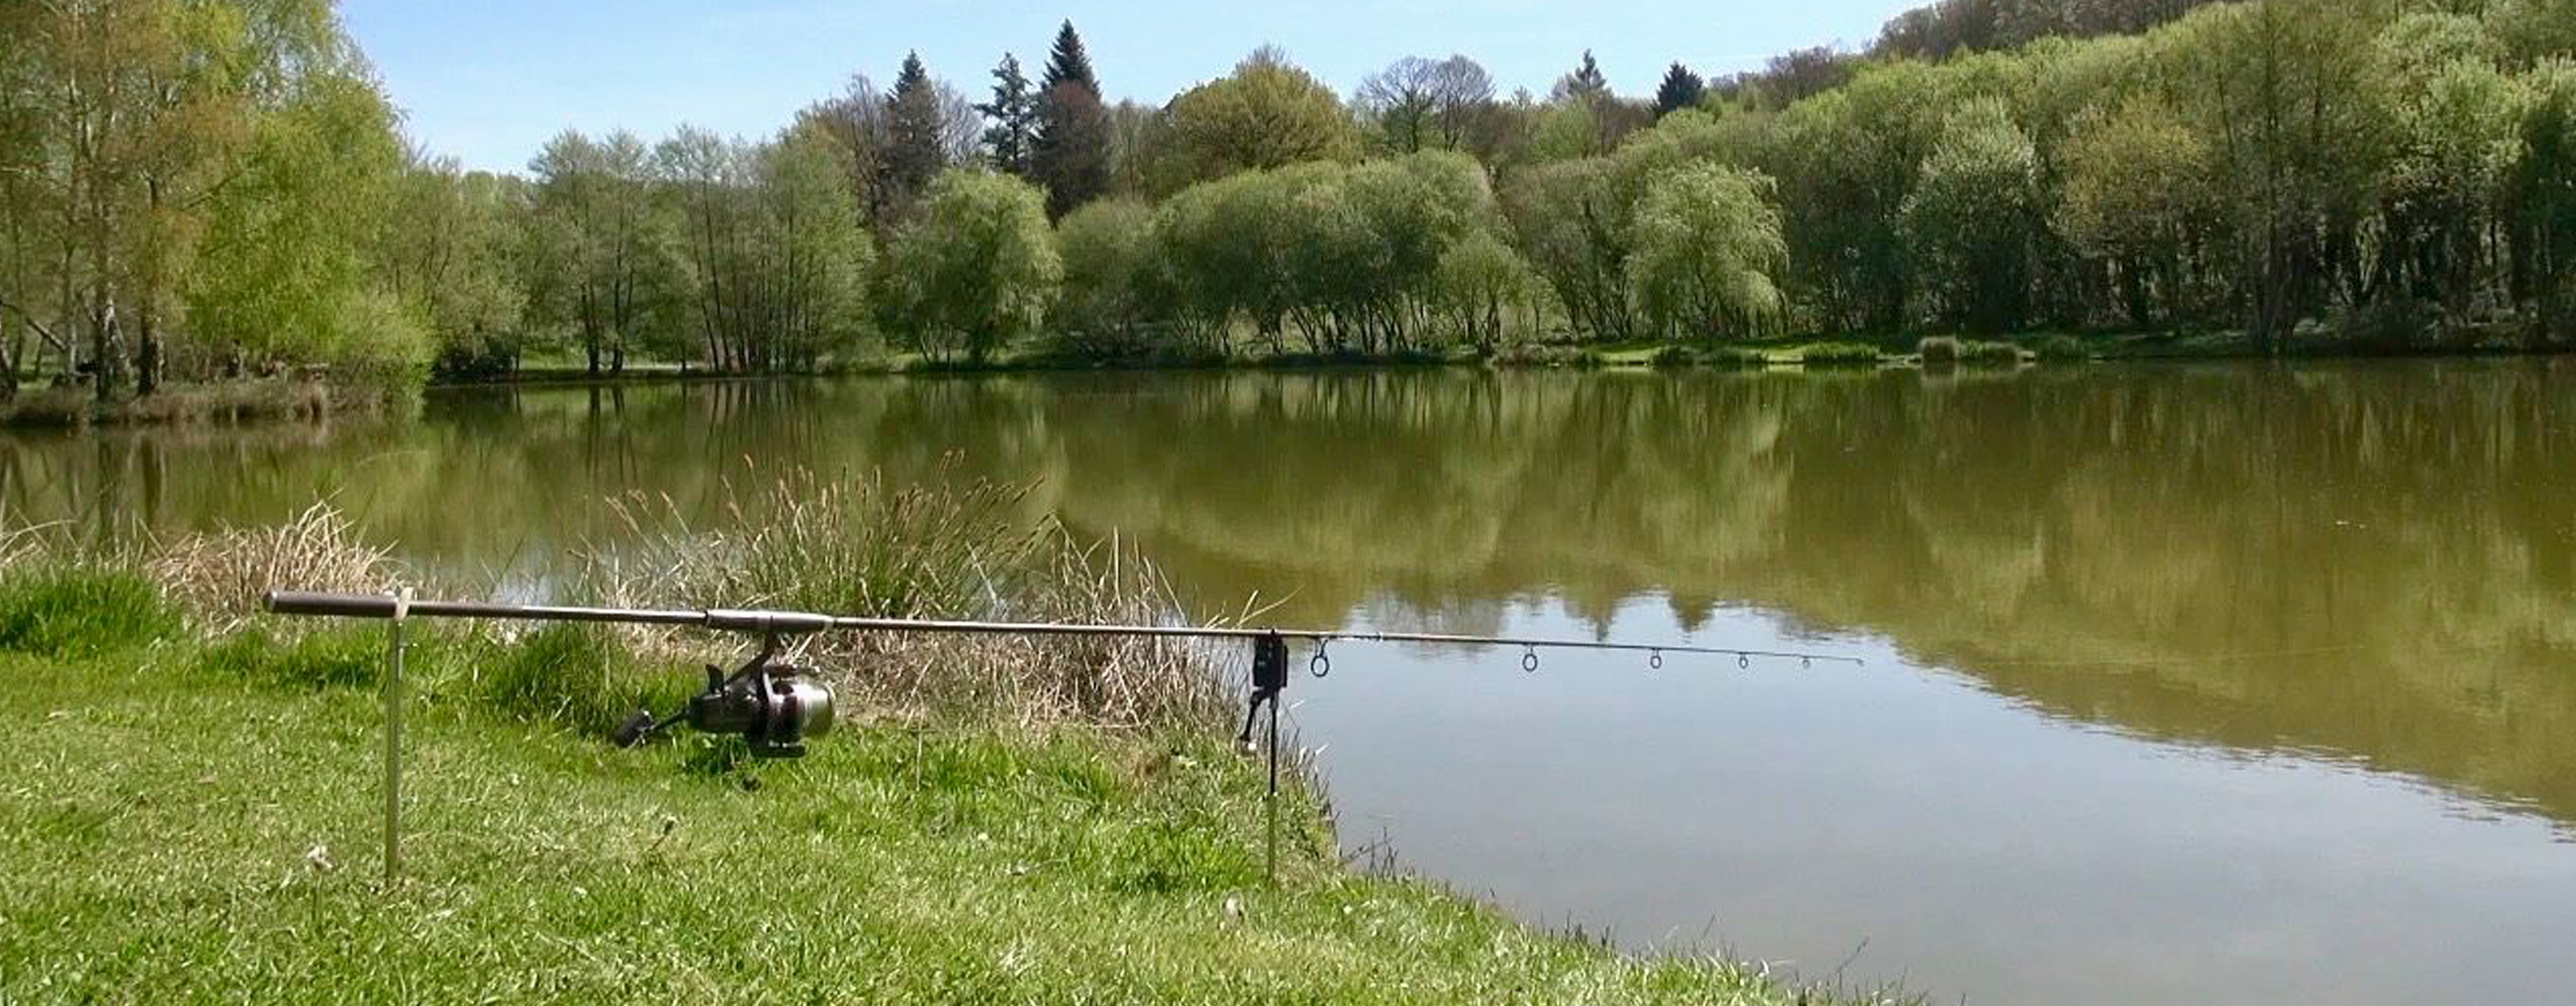 Fishing rod ready for carp fishing at Etang de Azat-Chatenet lake in France